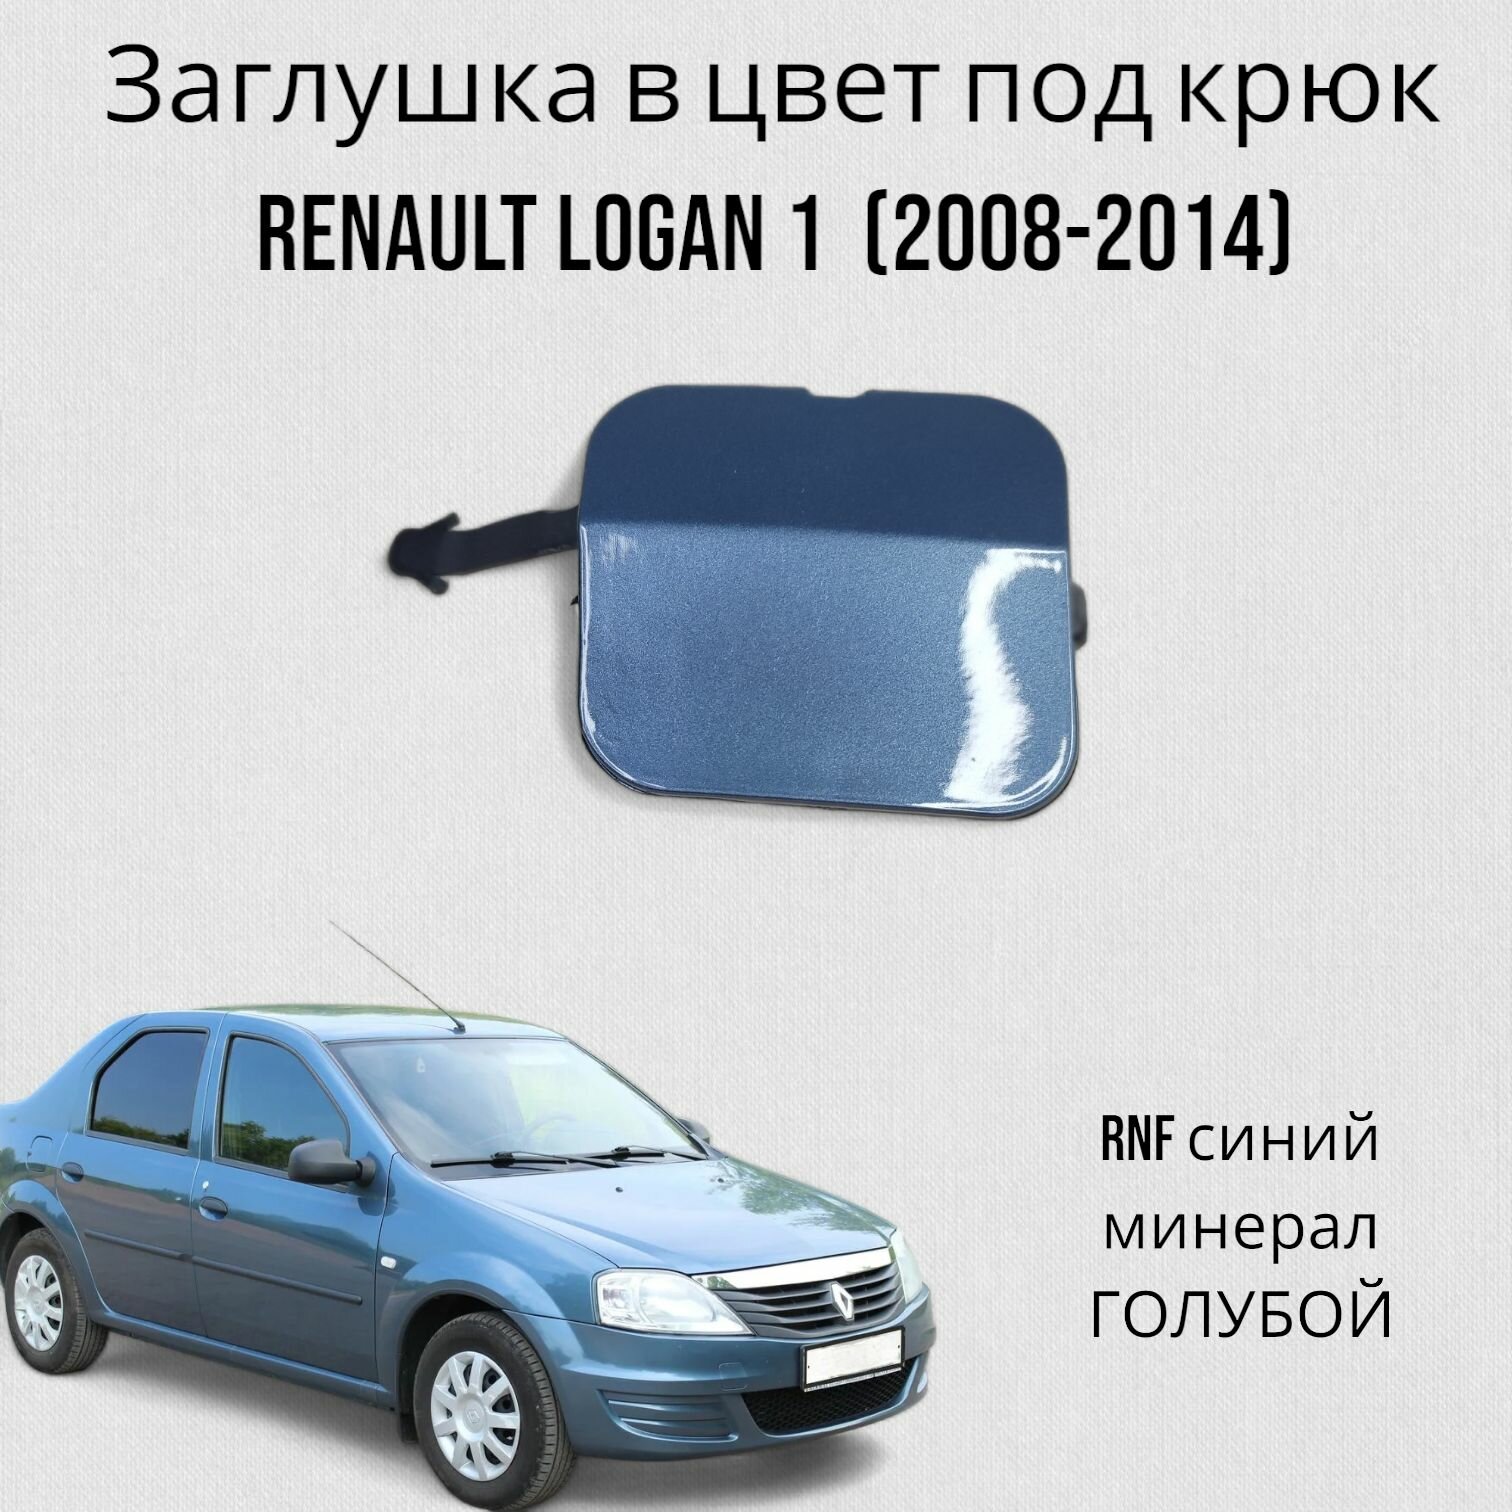 Заглушка в цвет под крюк Renault Logan 1 Рено Логан (2008-2014) RNF синий минерал